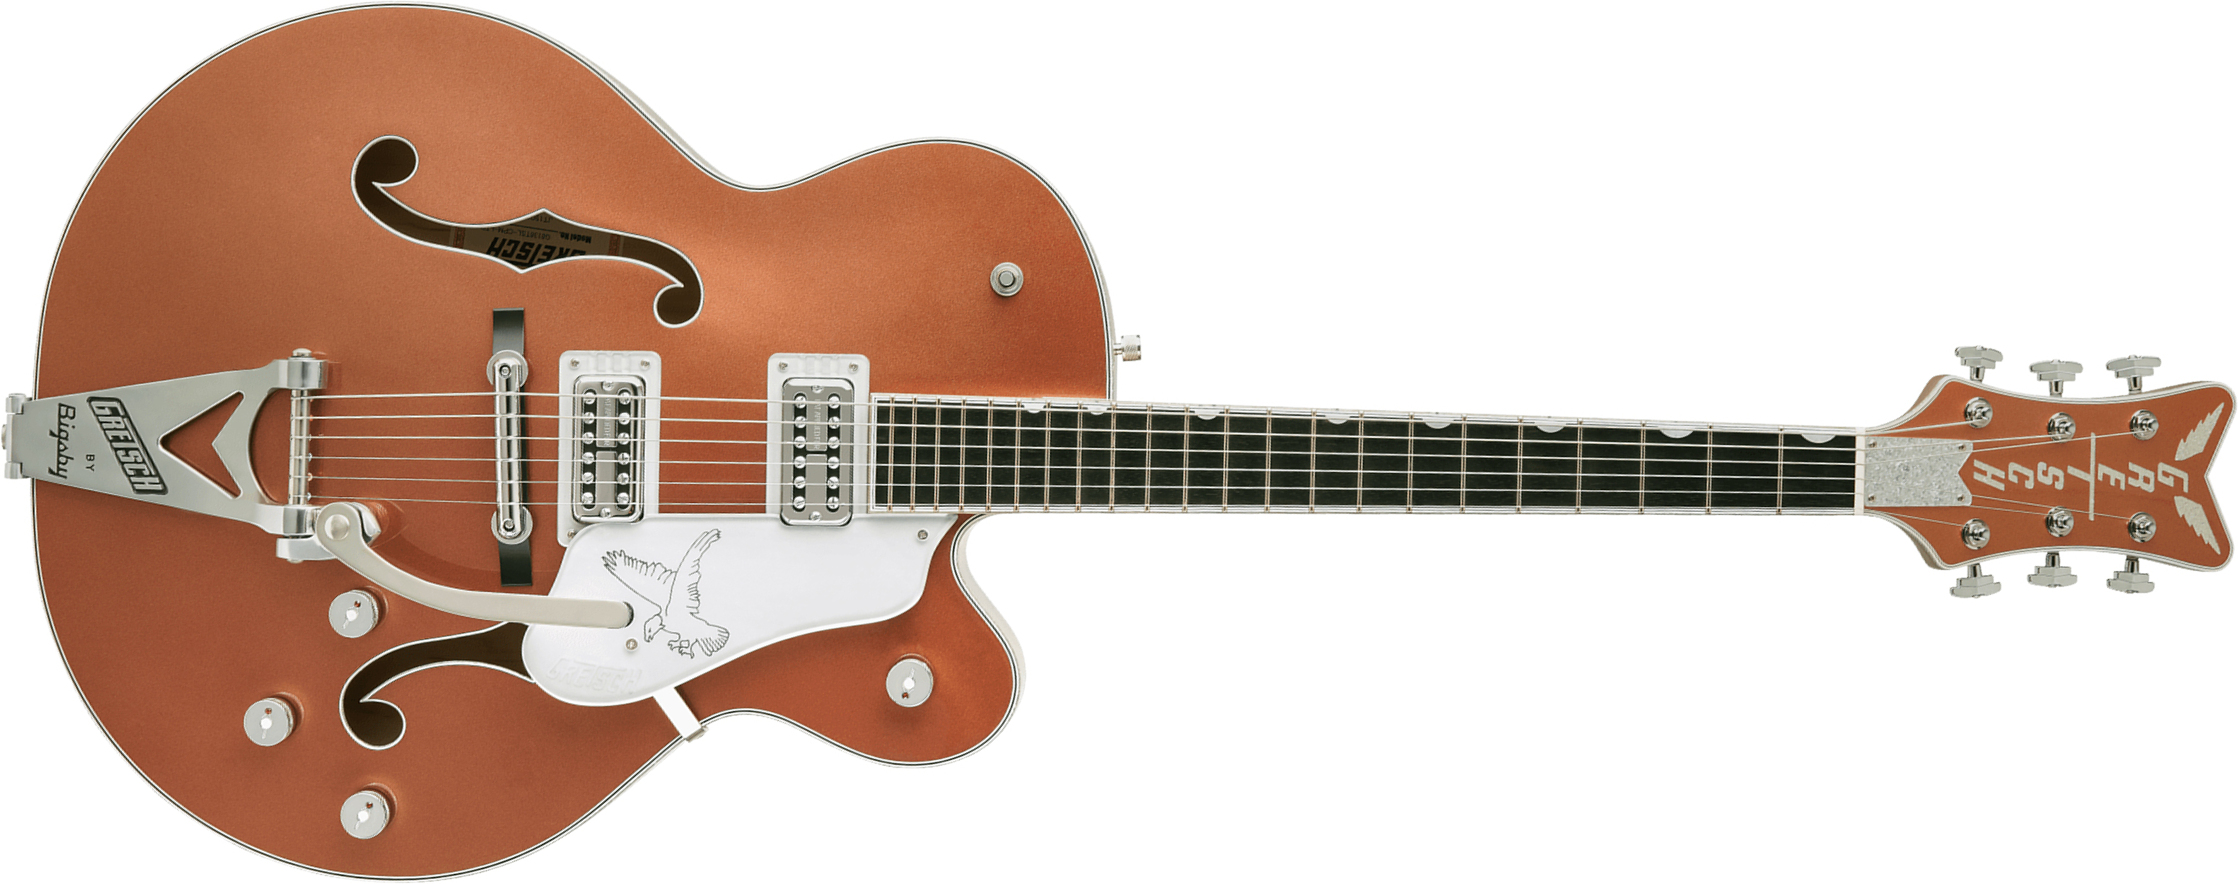 Gretsch G6136t Falcon Bigsby Pro Jap Hh Tv Jones Trem Eb - Two-tone Copper/sahara Metallic - Hollow-body electric guitar - Main picture